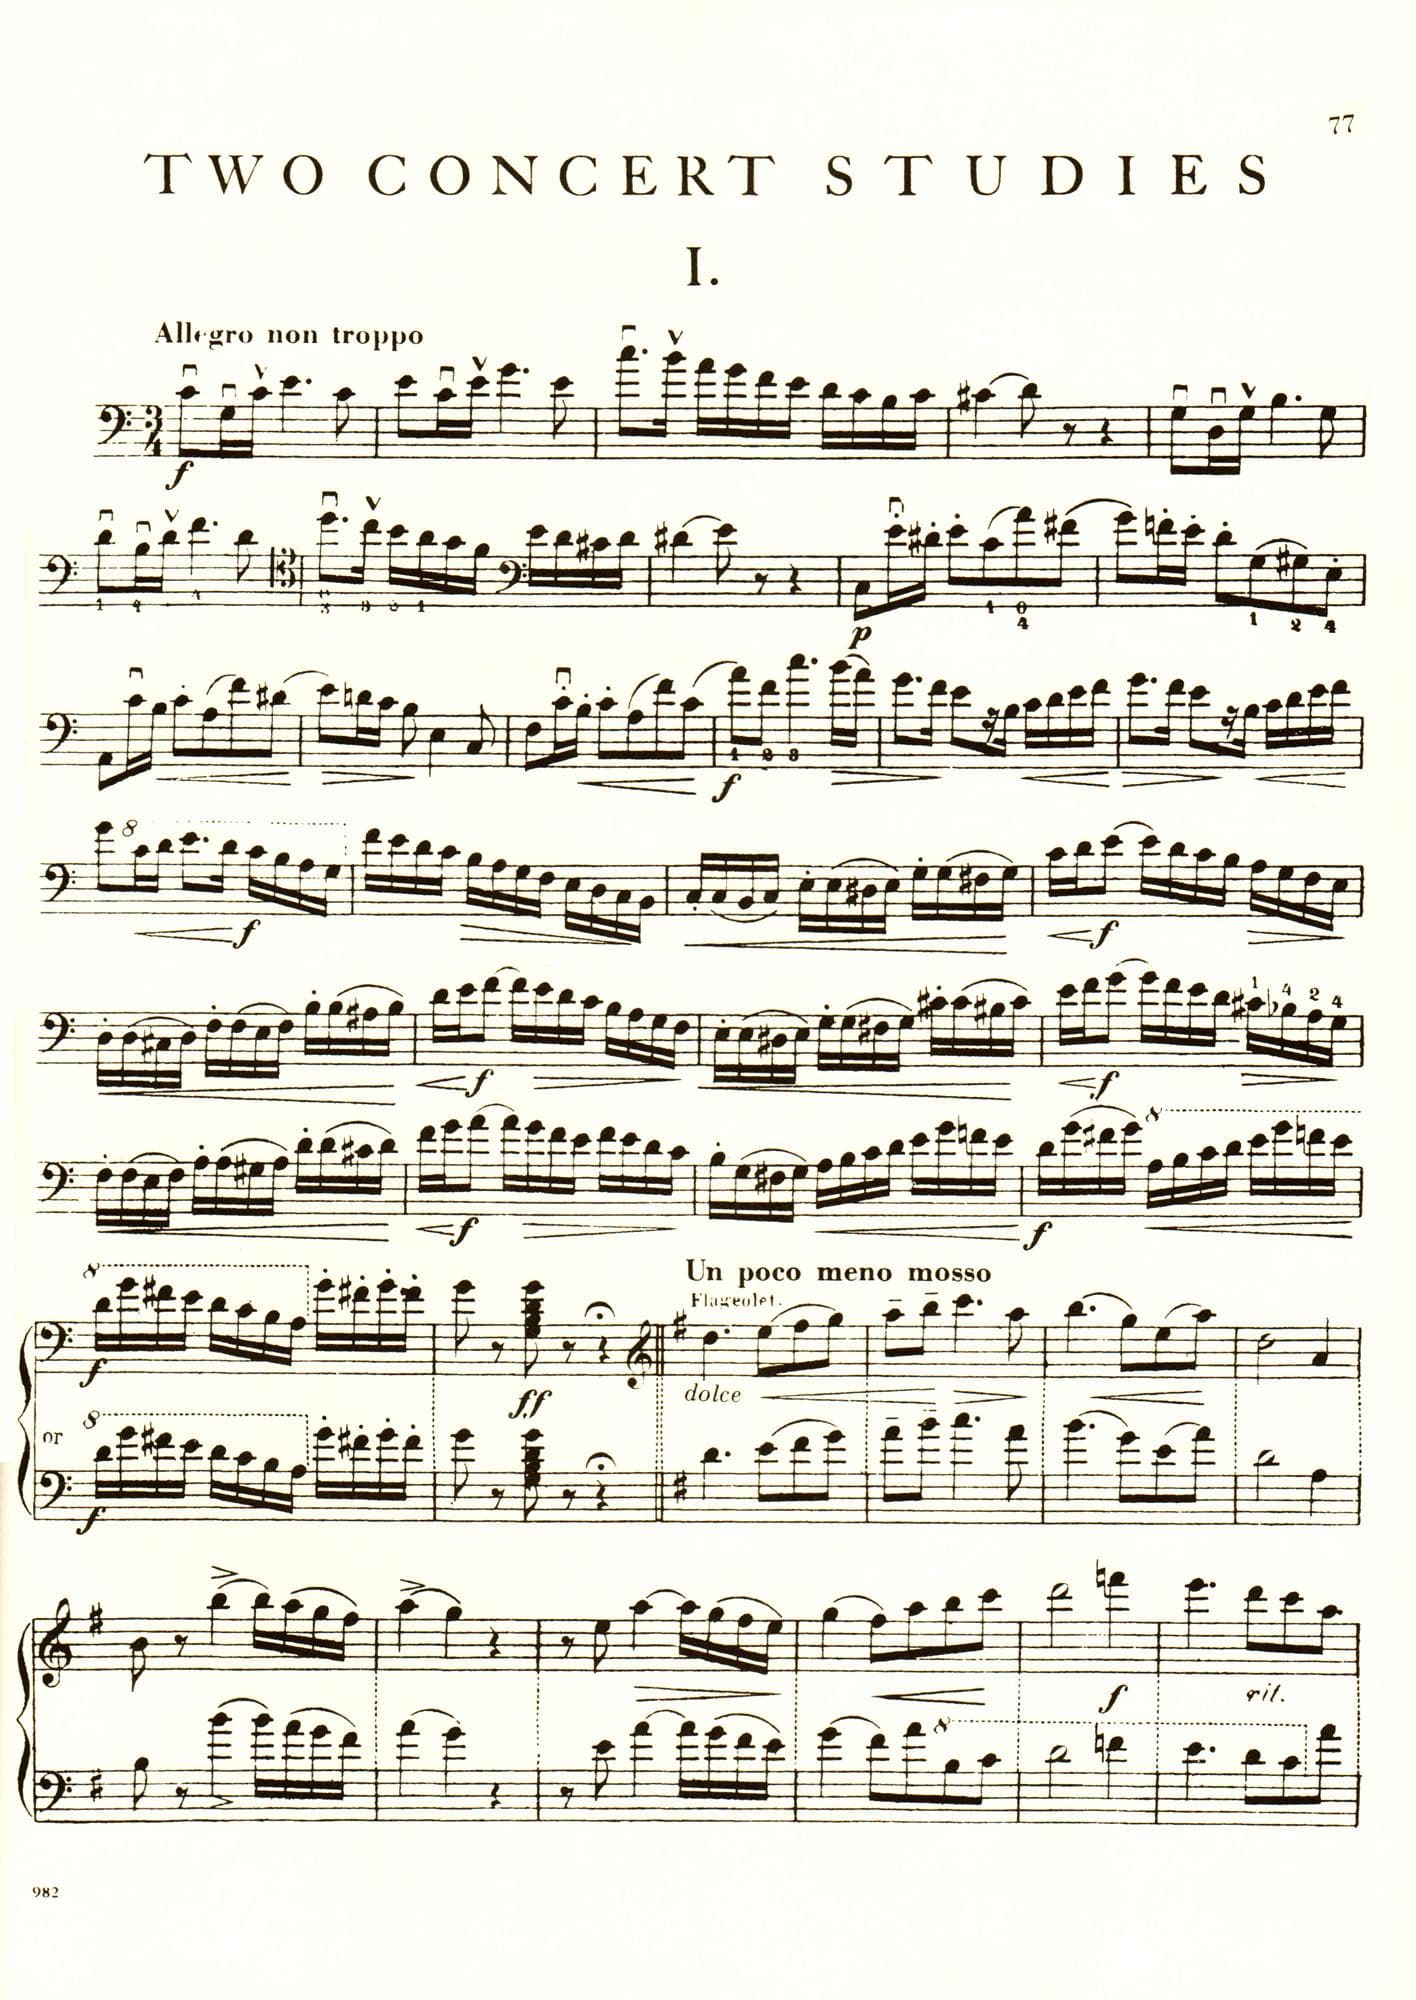 Simandl, Franz - New Method for String Bass, Part 2 - edited by Waldo Lyman - International Music Company